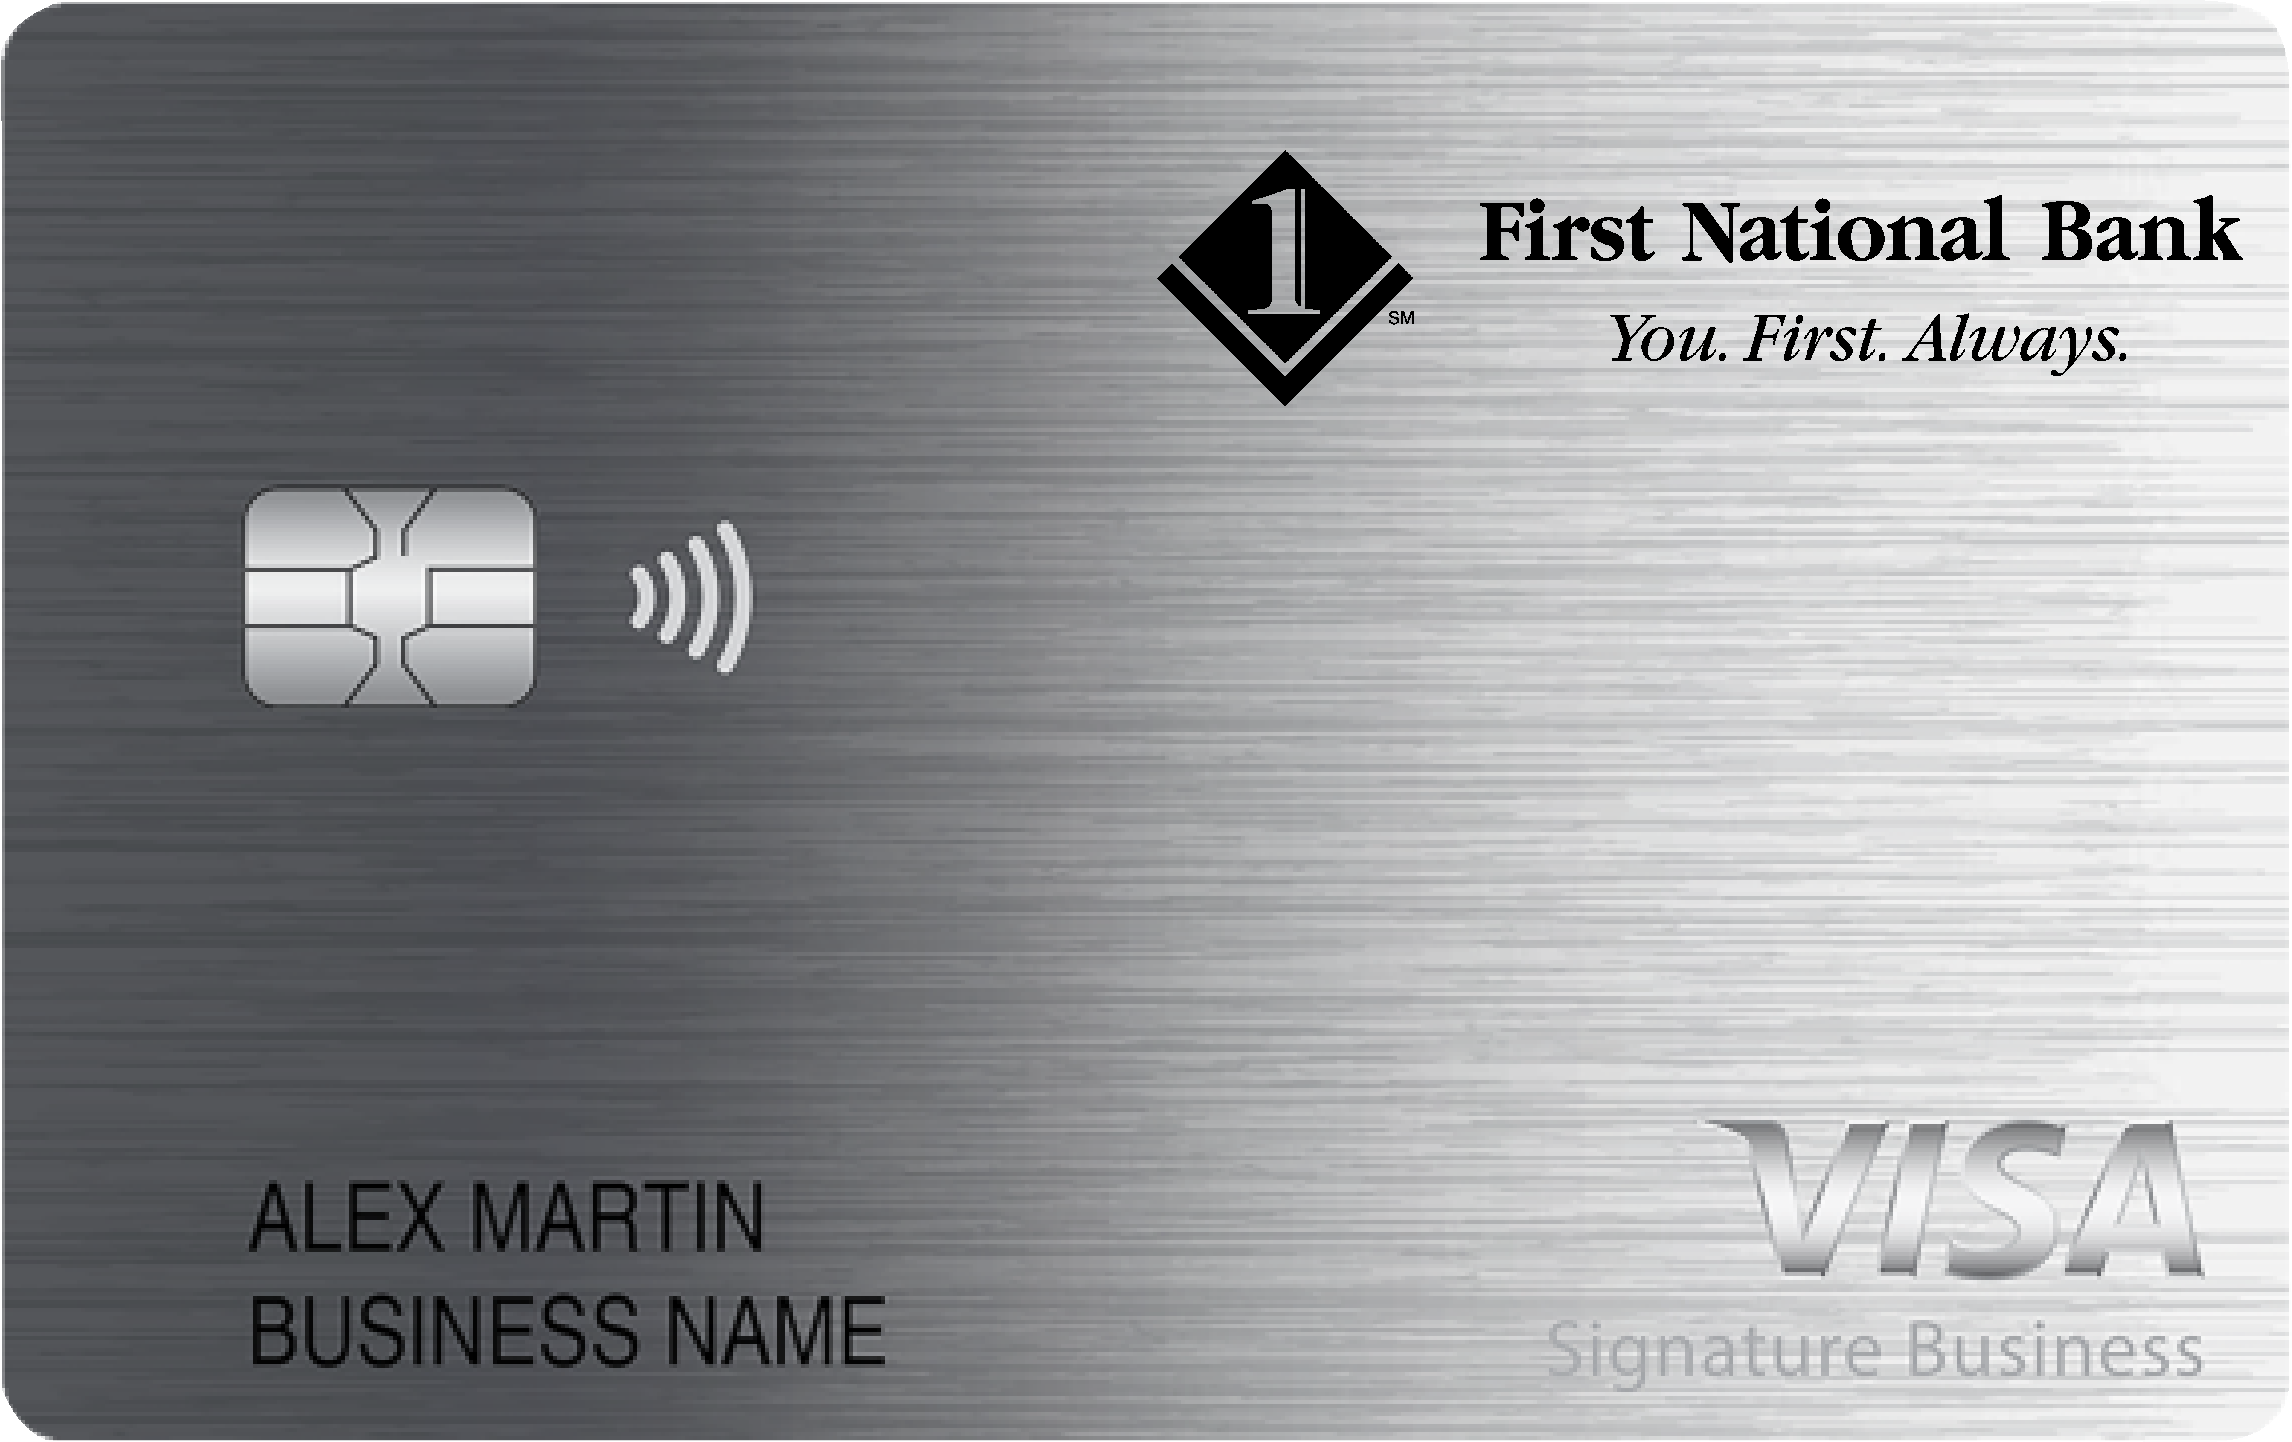 First National Bank Smart Business Rewards Card